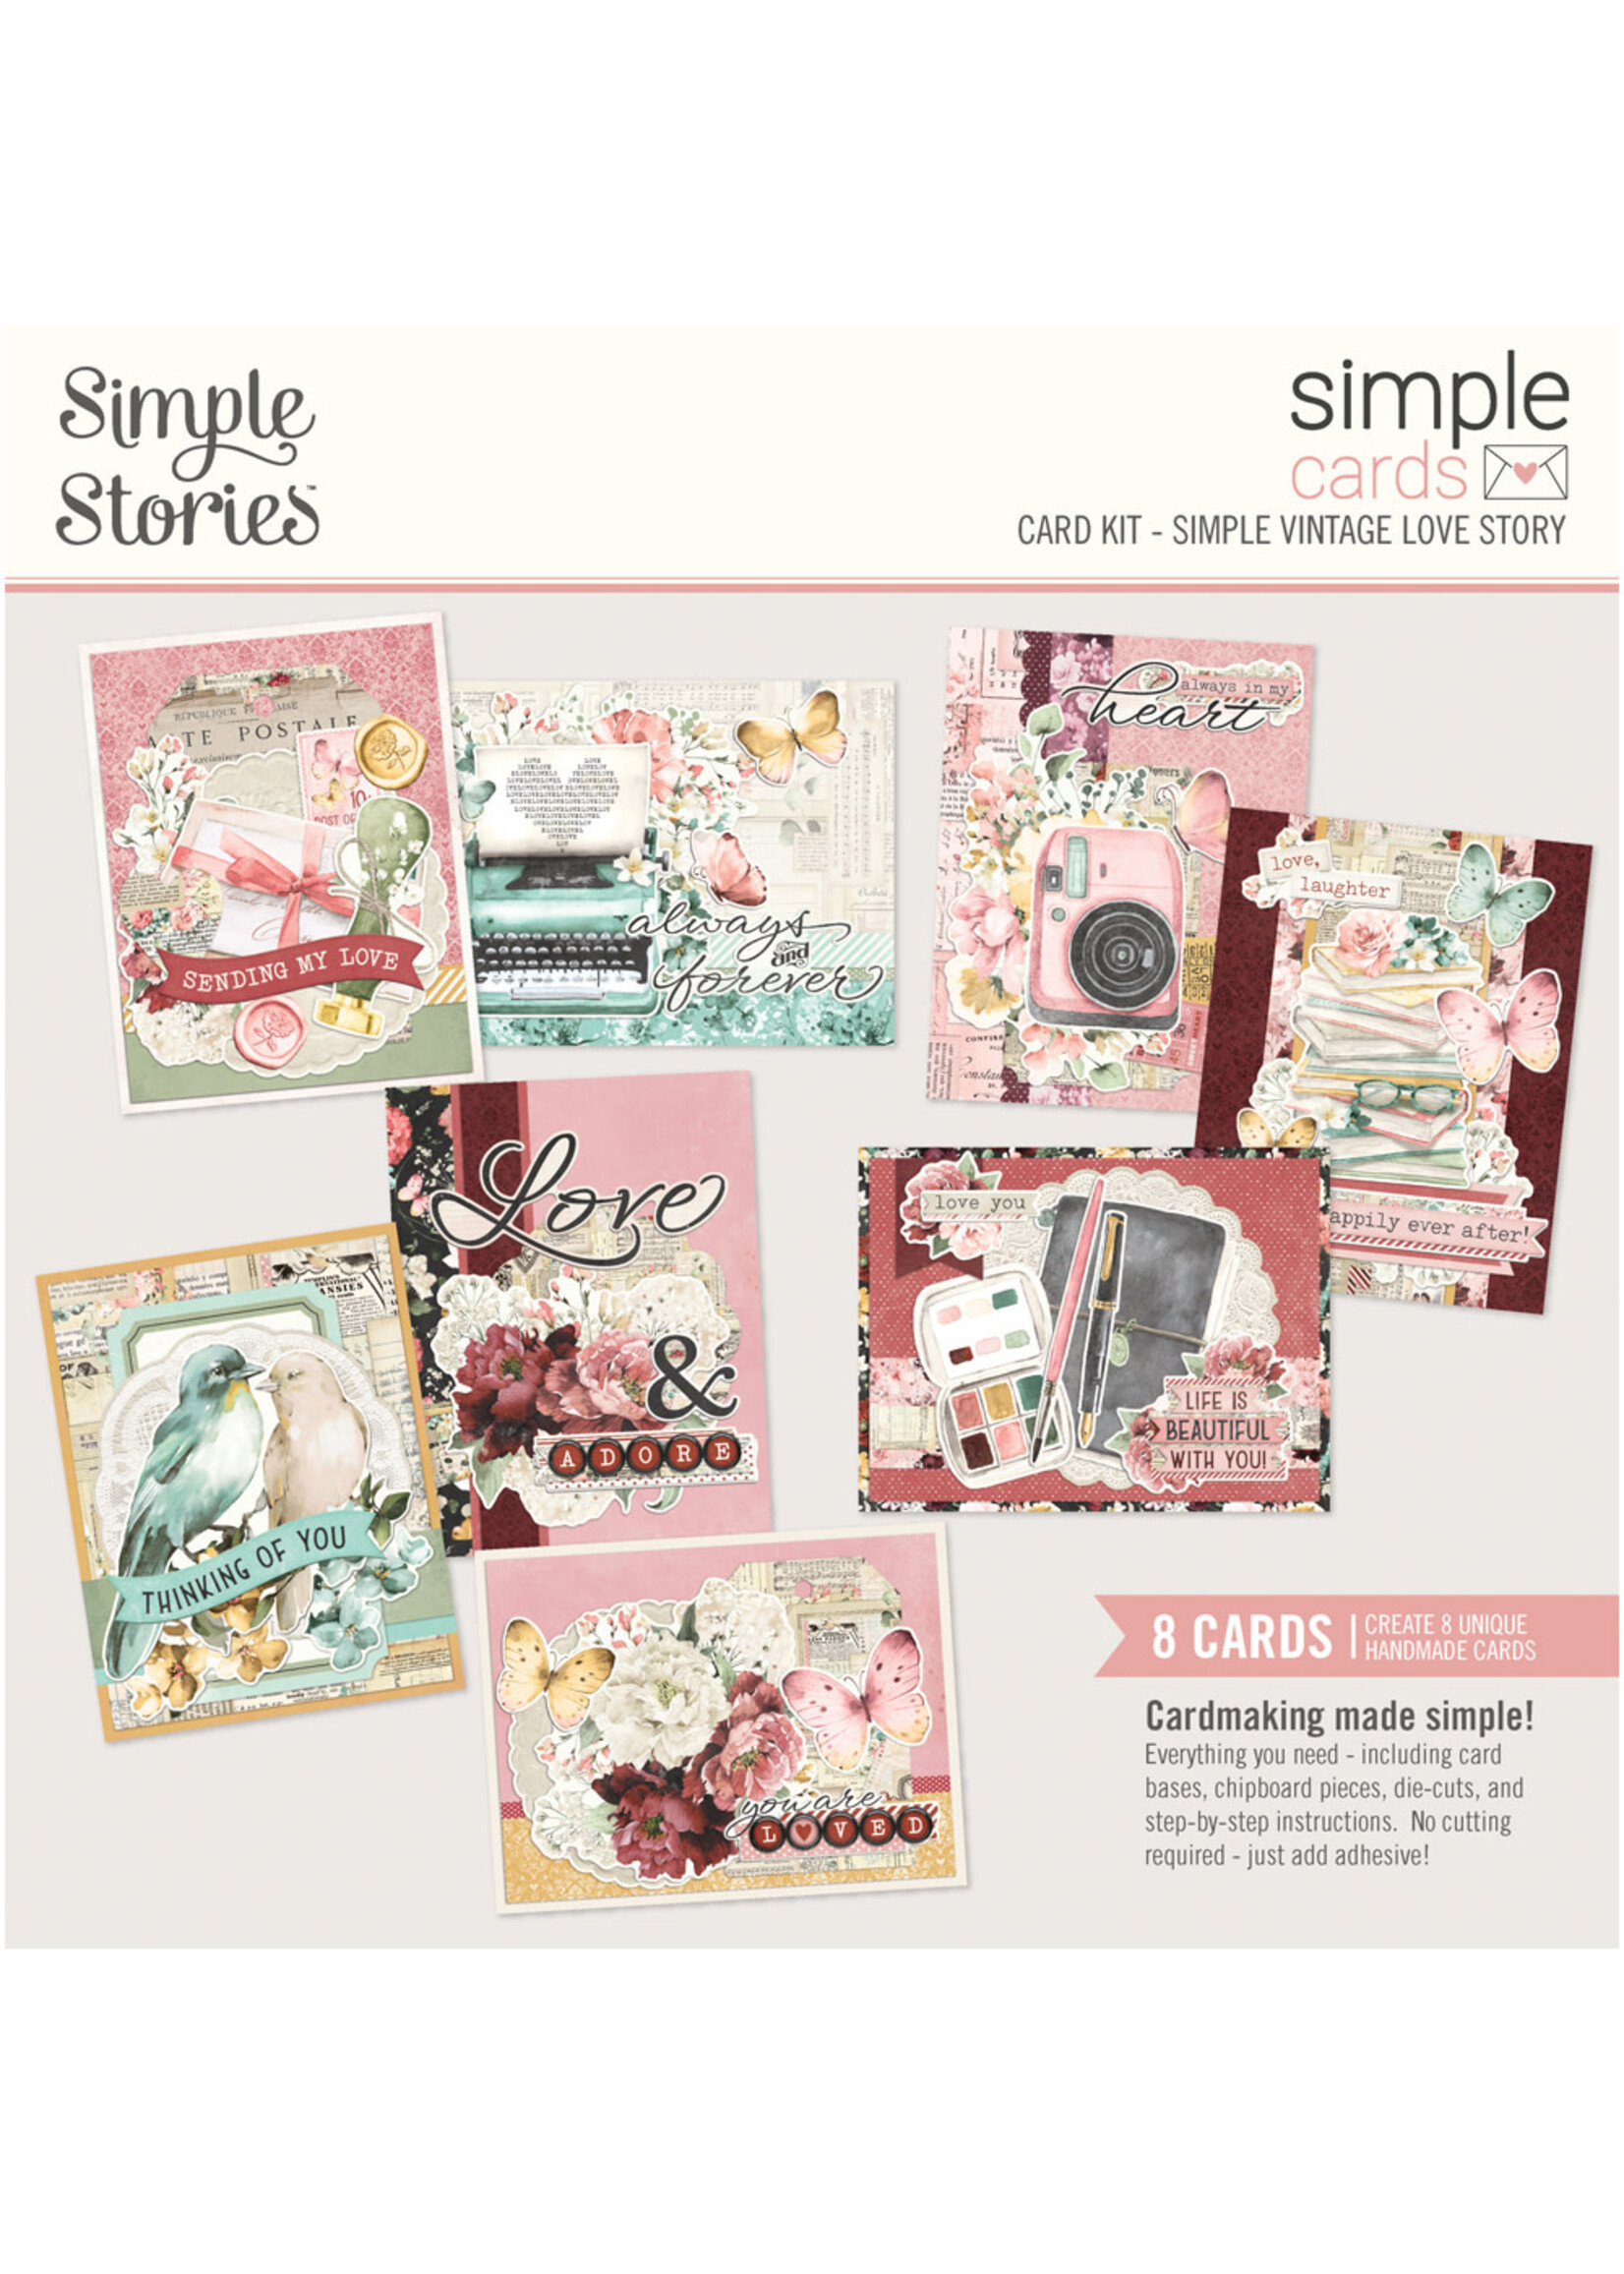 Simple Stories Simple Vintage Love Story - Simple Cards Card Kit